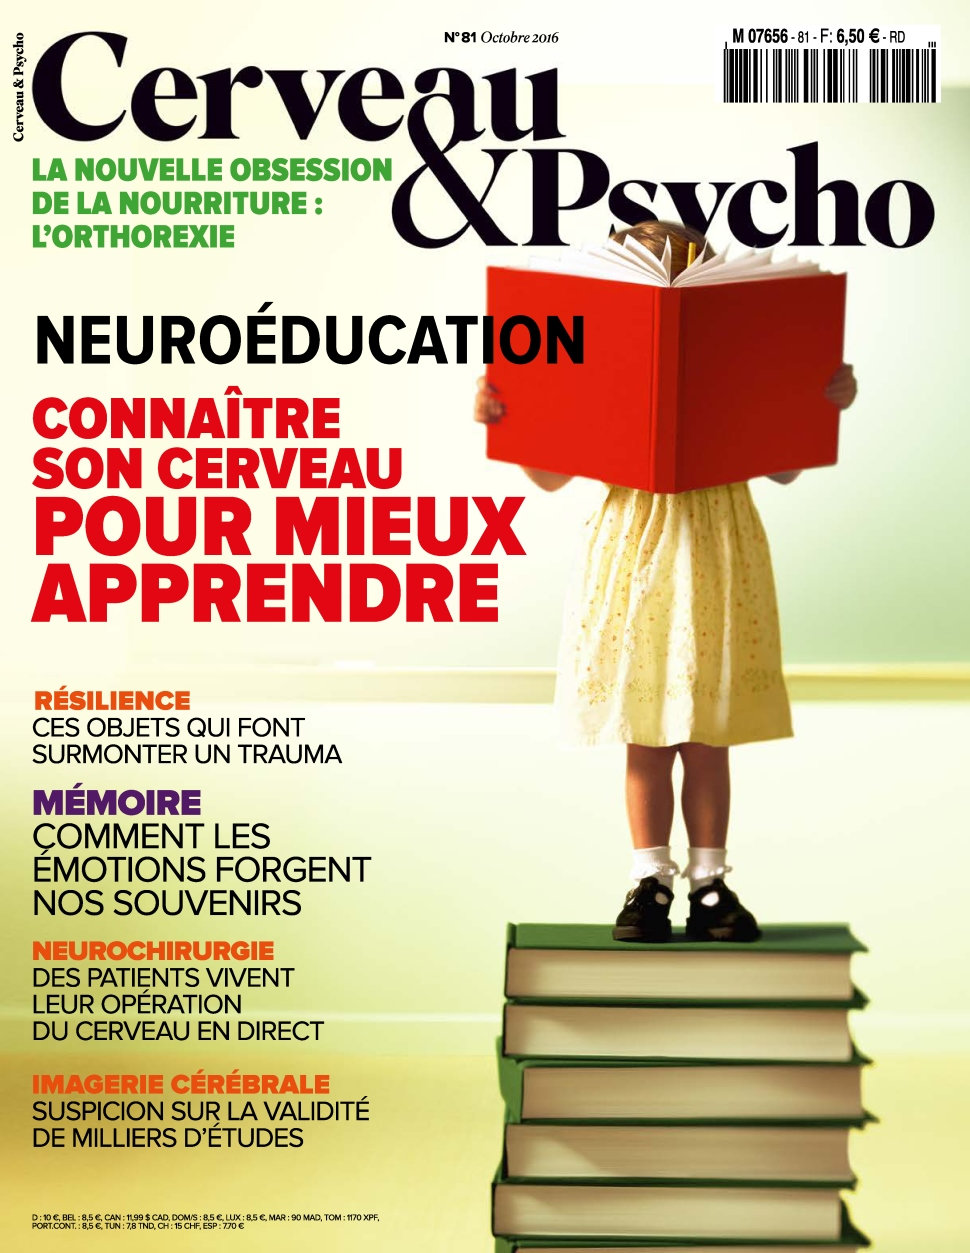 Cerveau & Psycho N°81 - Octobre 2016